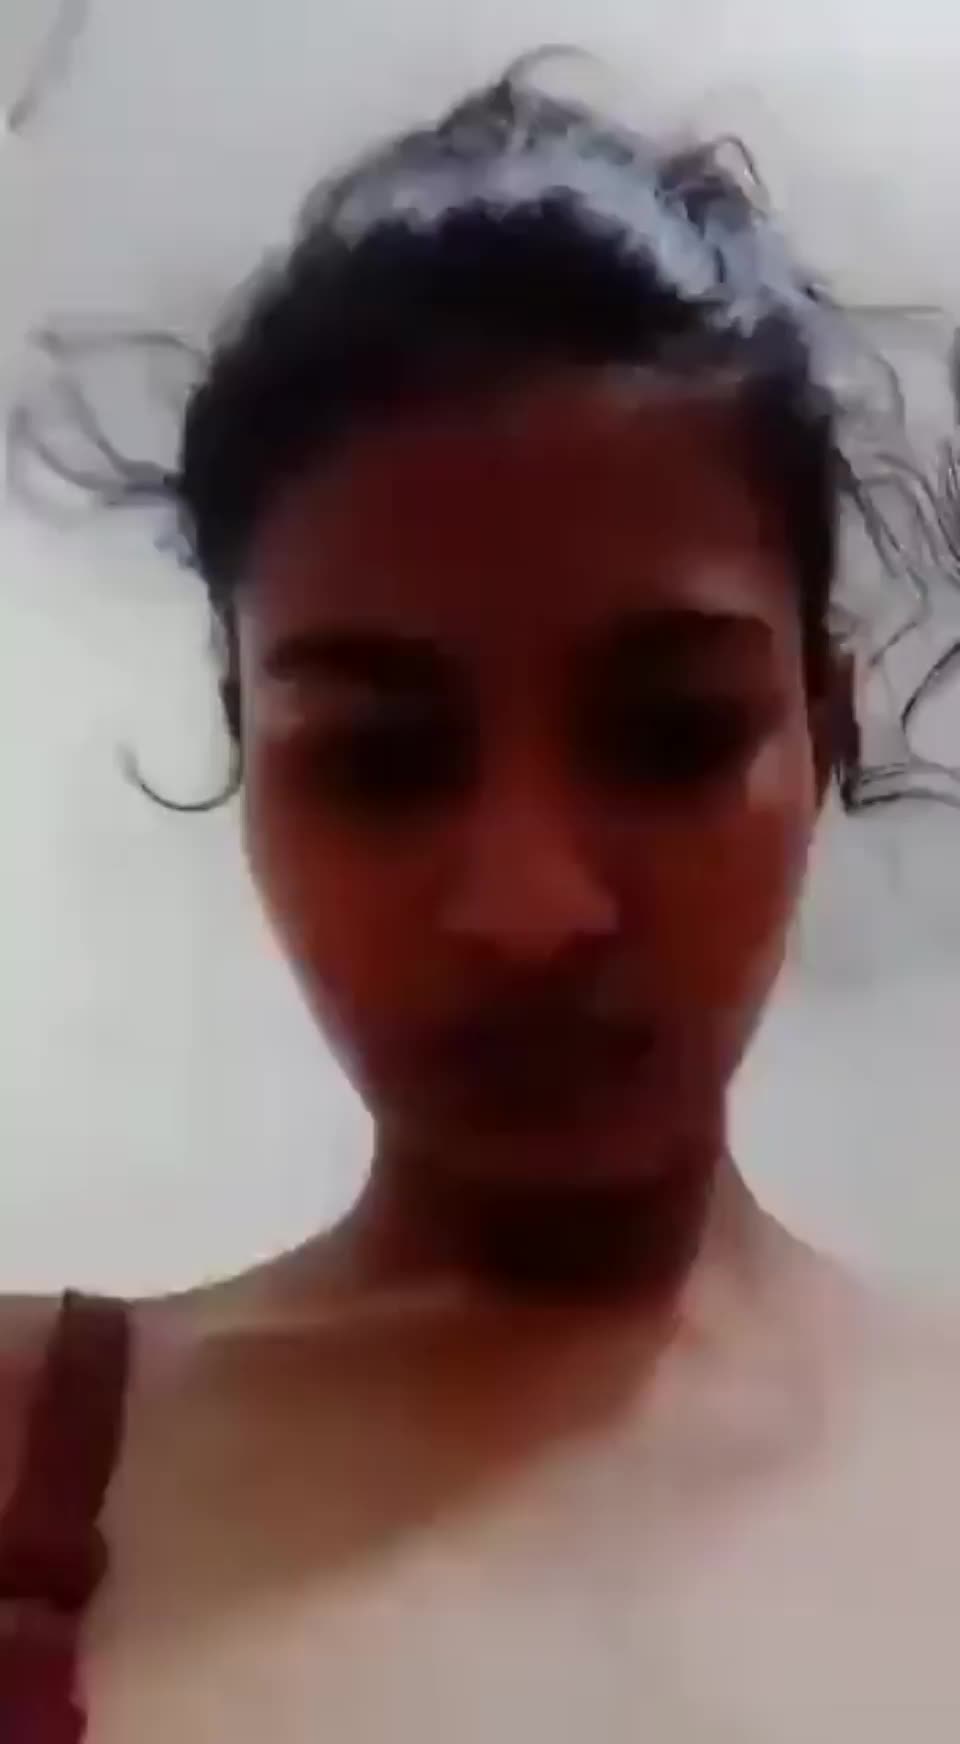 Indian boobies : video clip